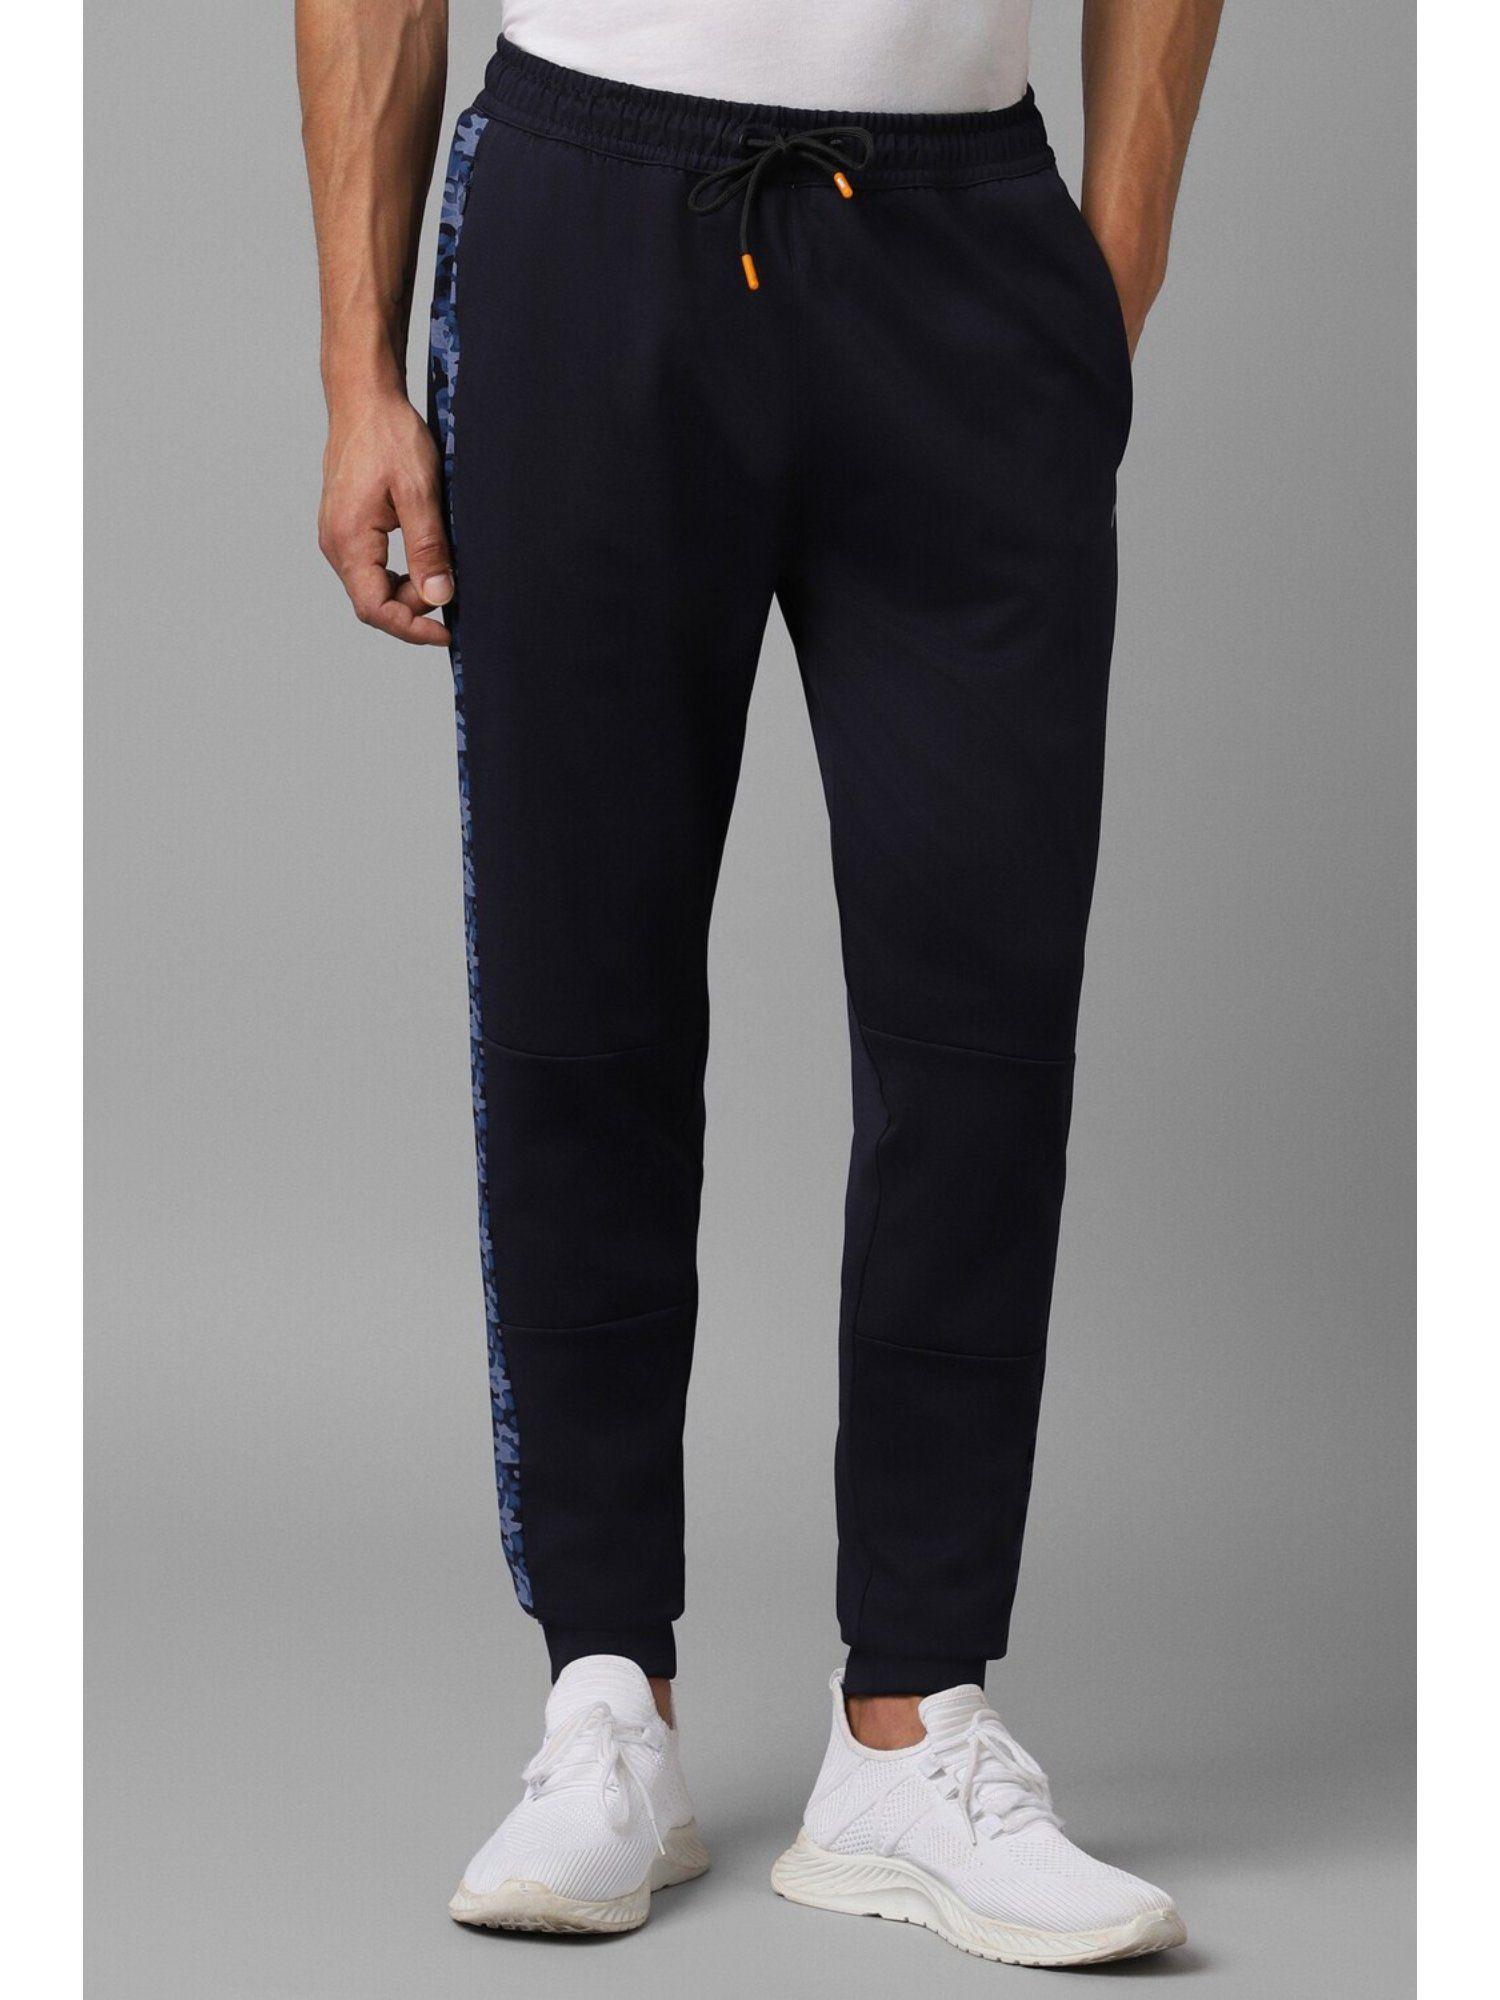 men navy blue print casual joggers pants